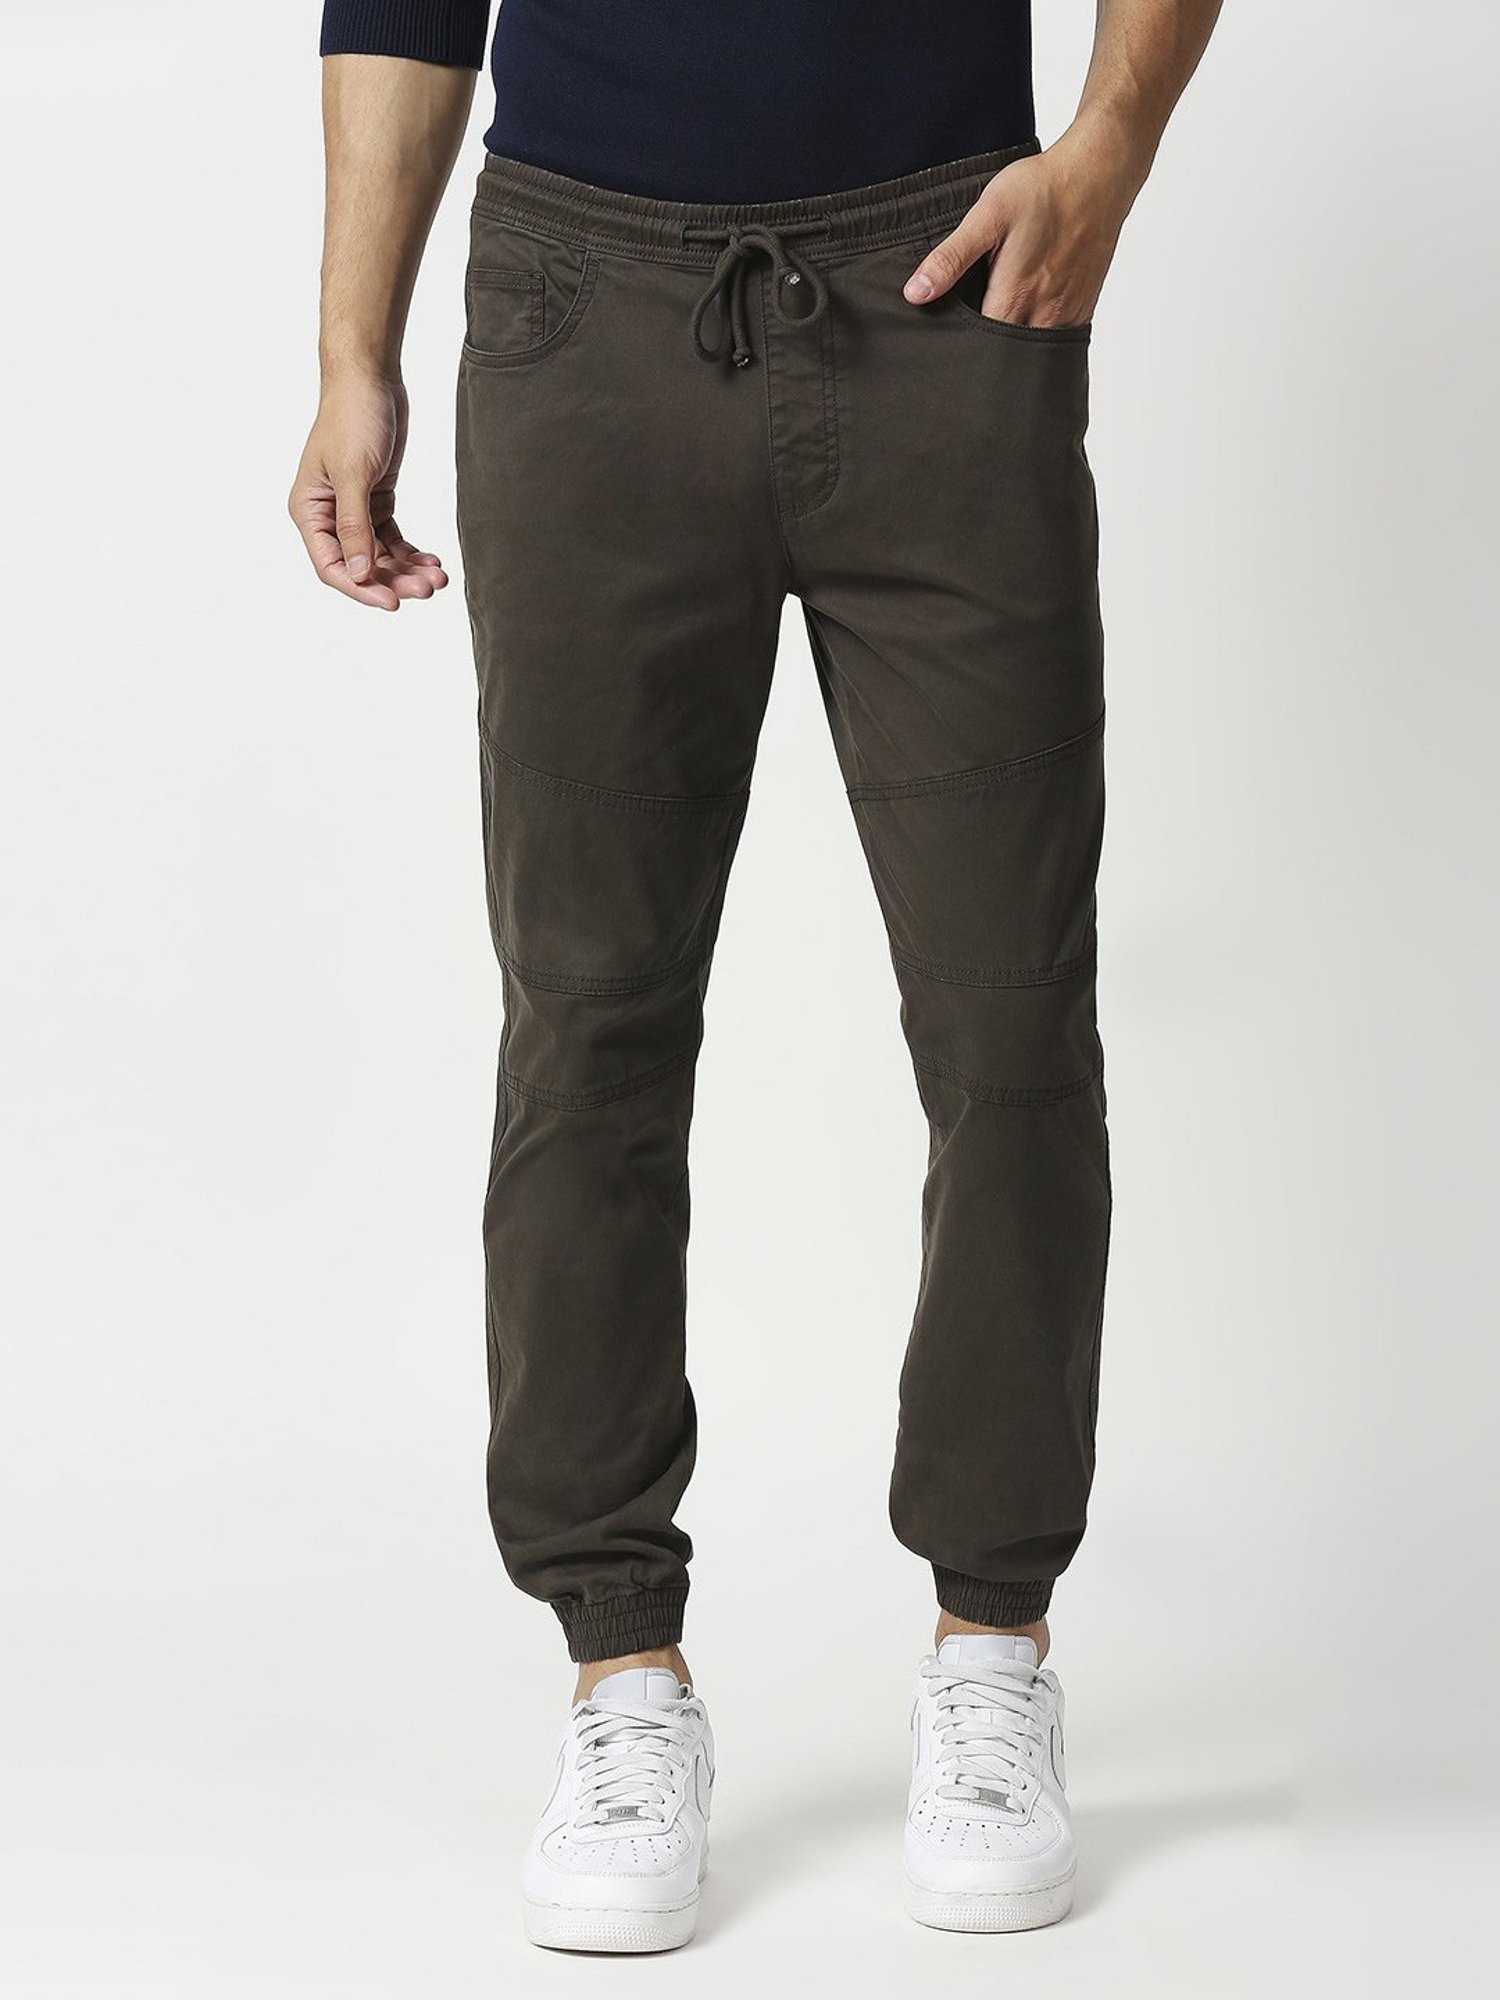 Buy Beige Trousers  Pants for Men by Pepe Jeans Online  Ajiocom